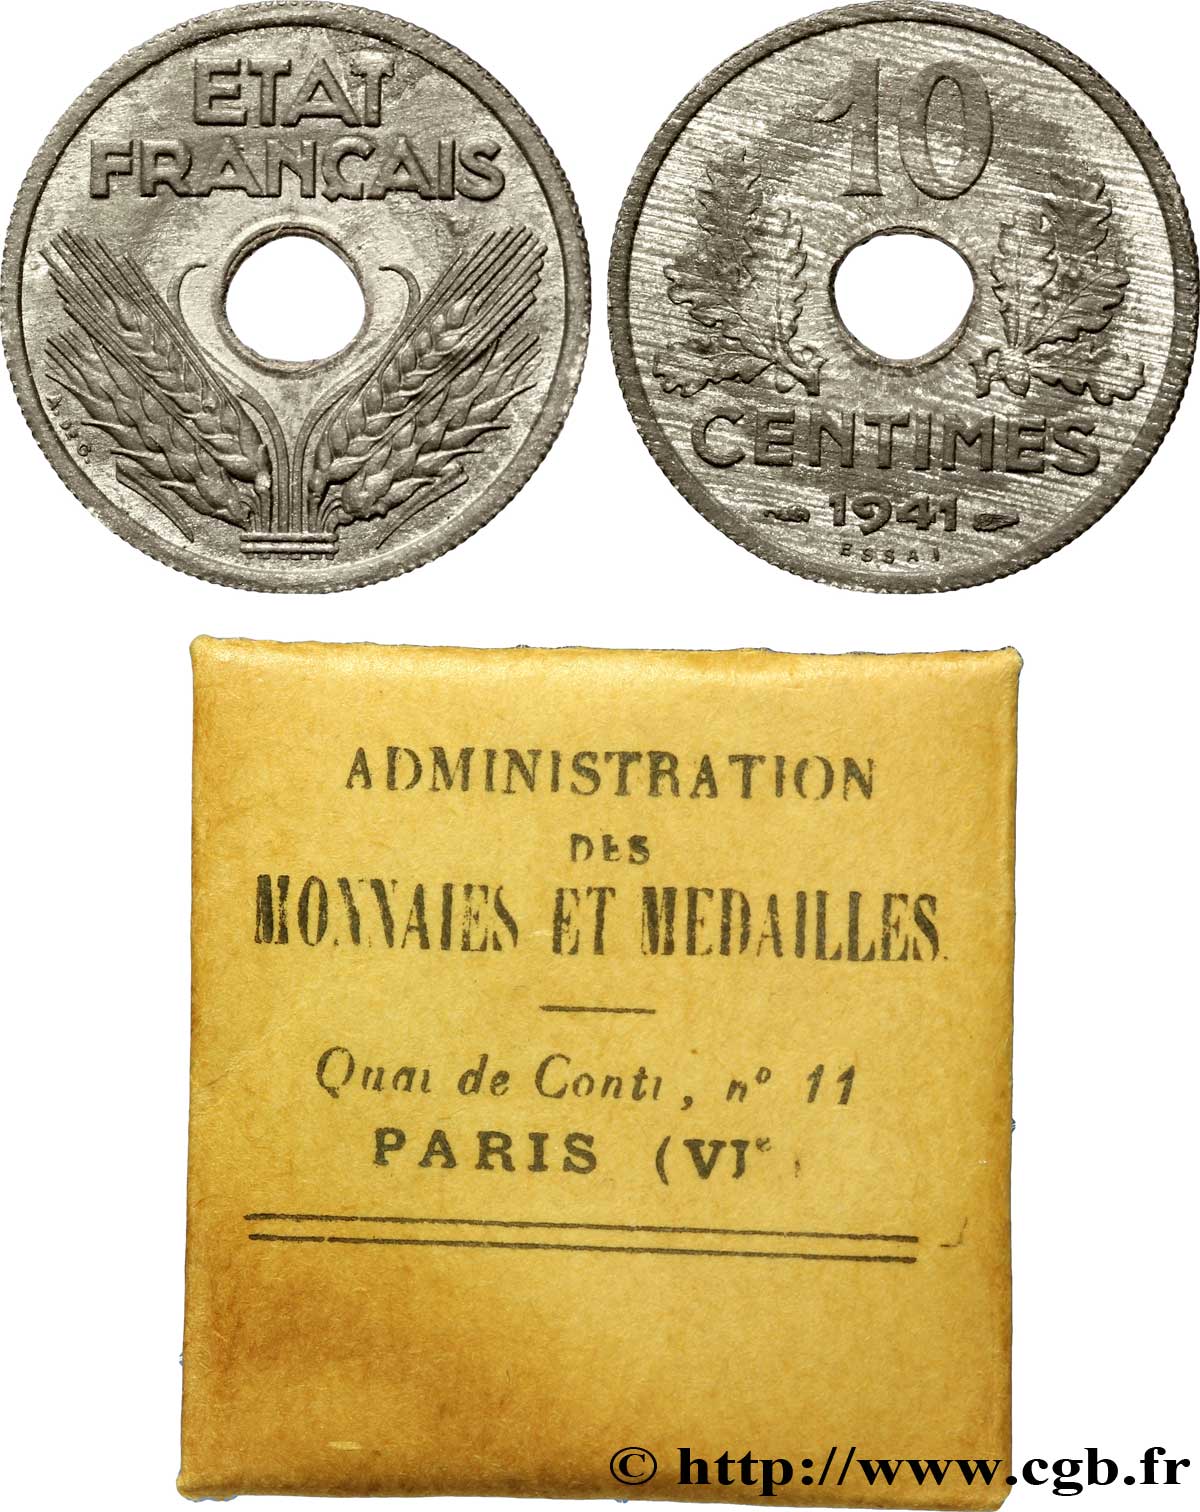 Essai de 10 centimes, État français, grand module 1941  F.141/1 AU 